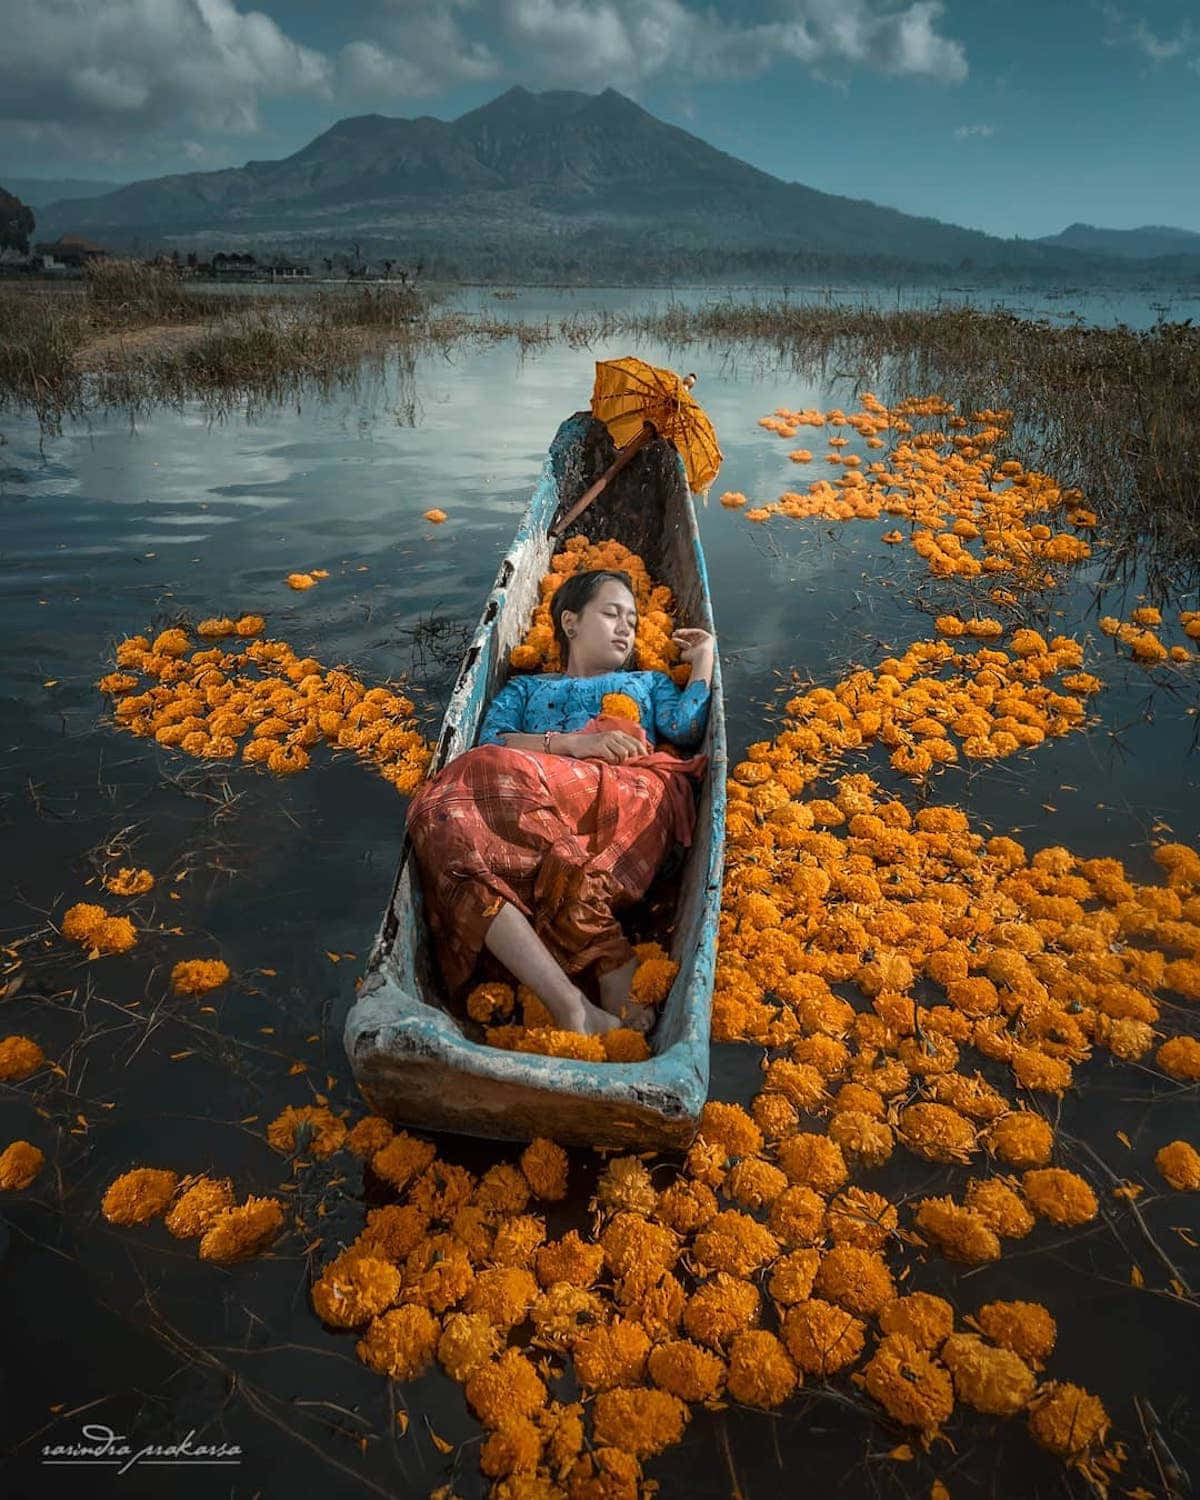 Enkvinna Ligger I En Båt Med Orange Blommor På Den.